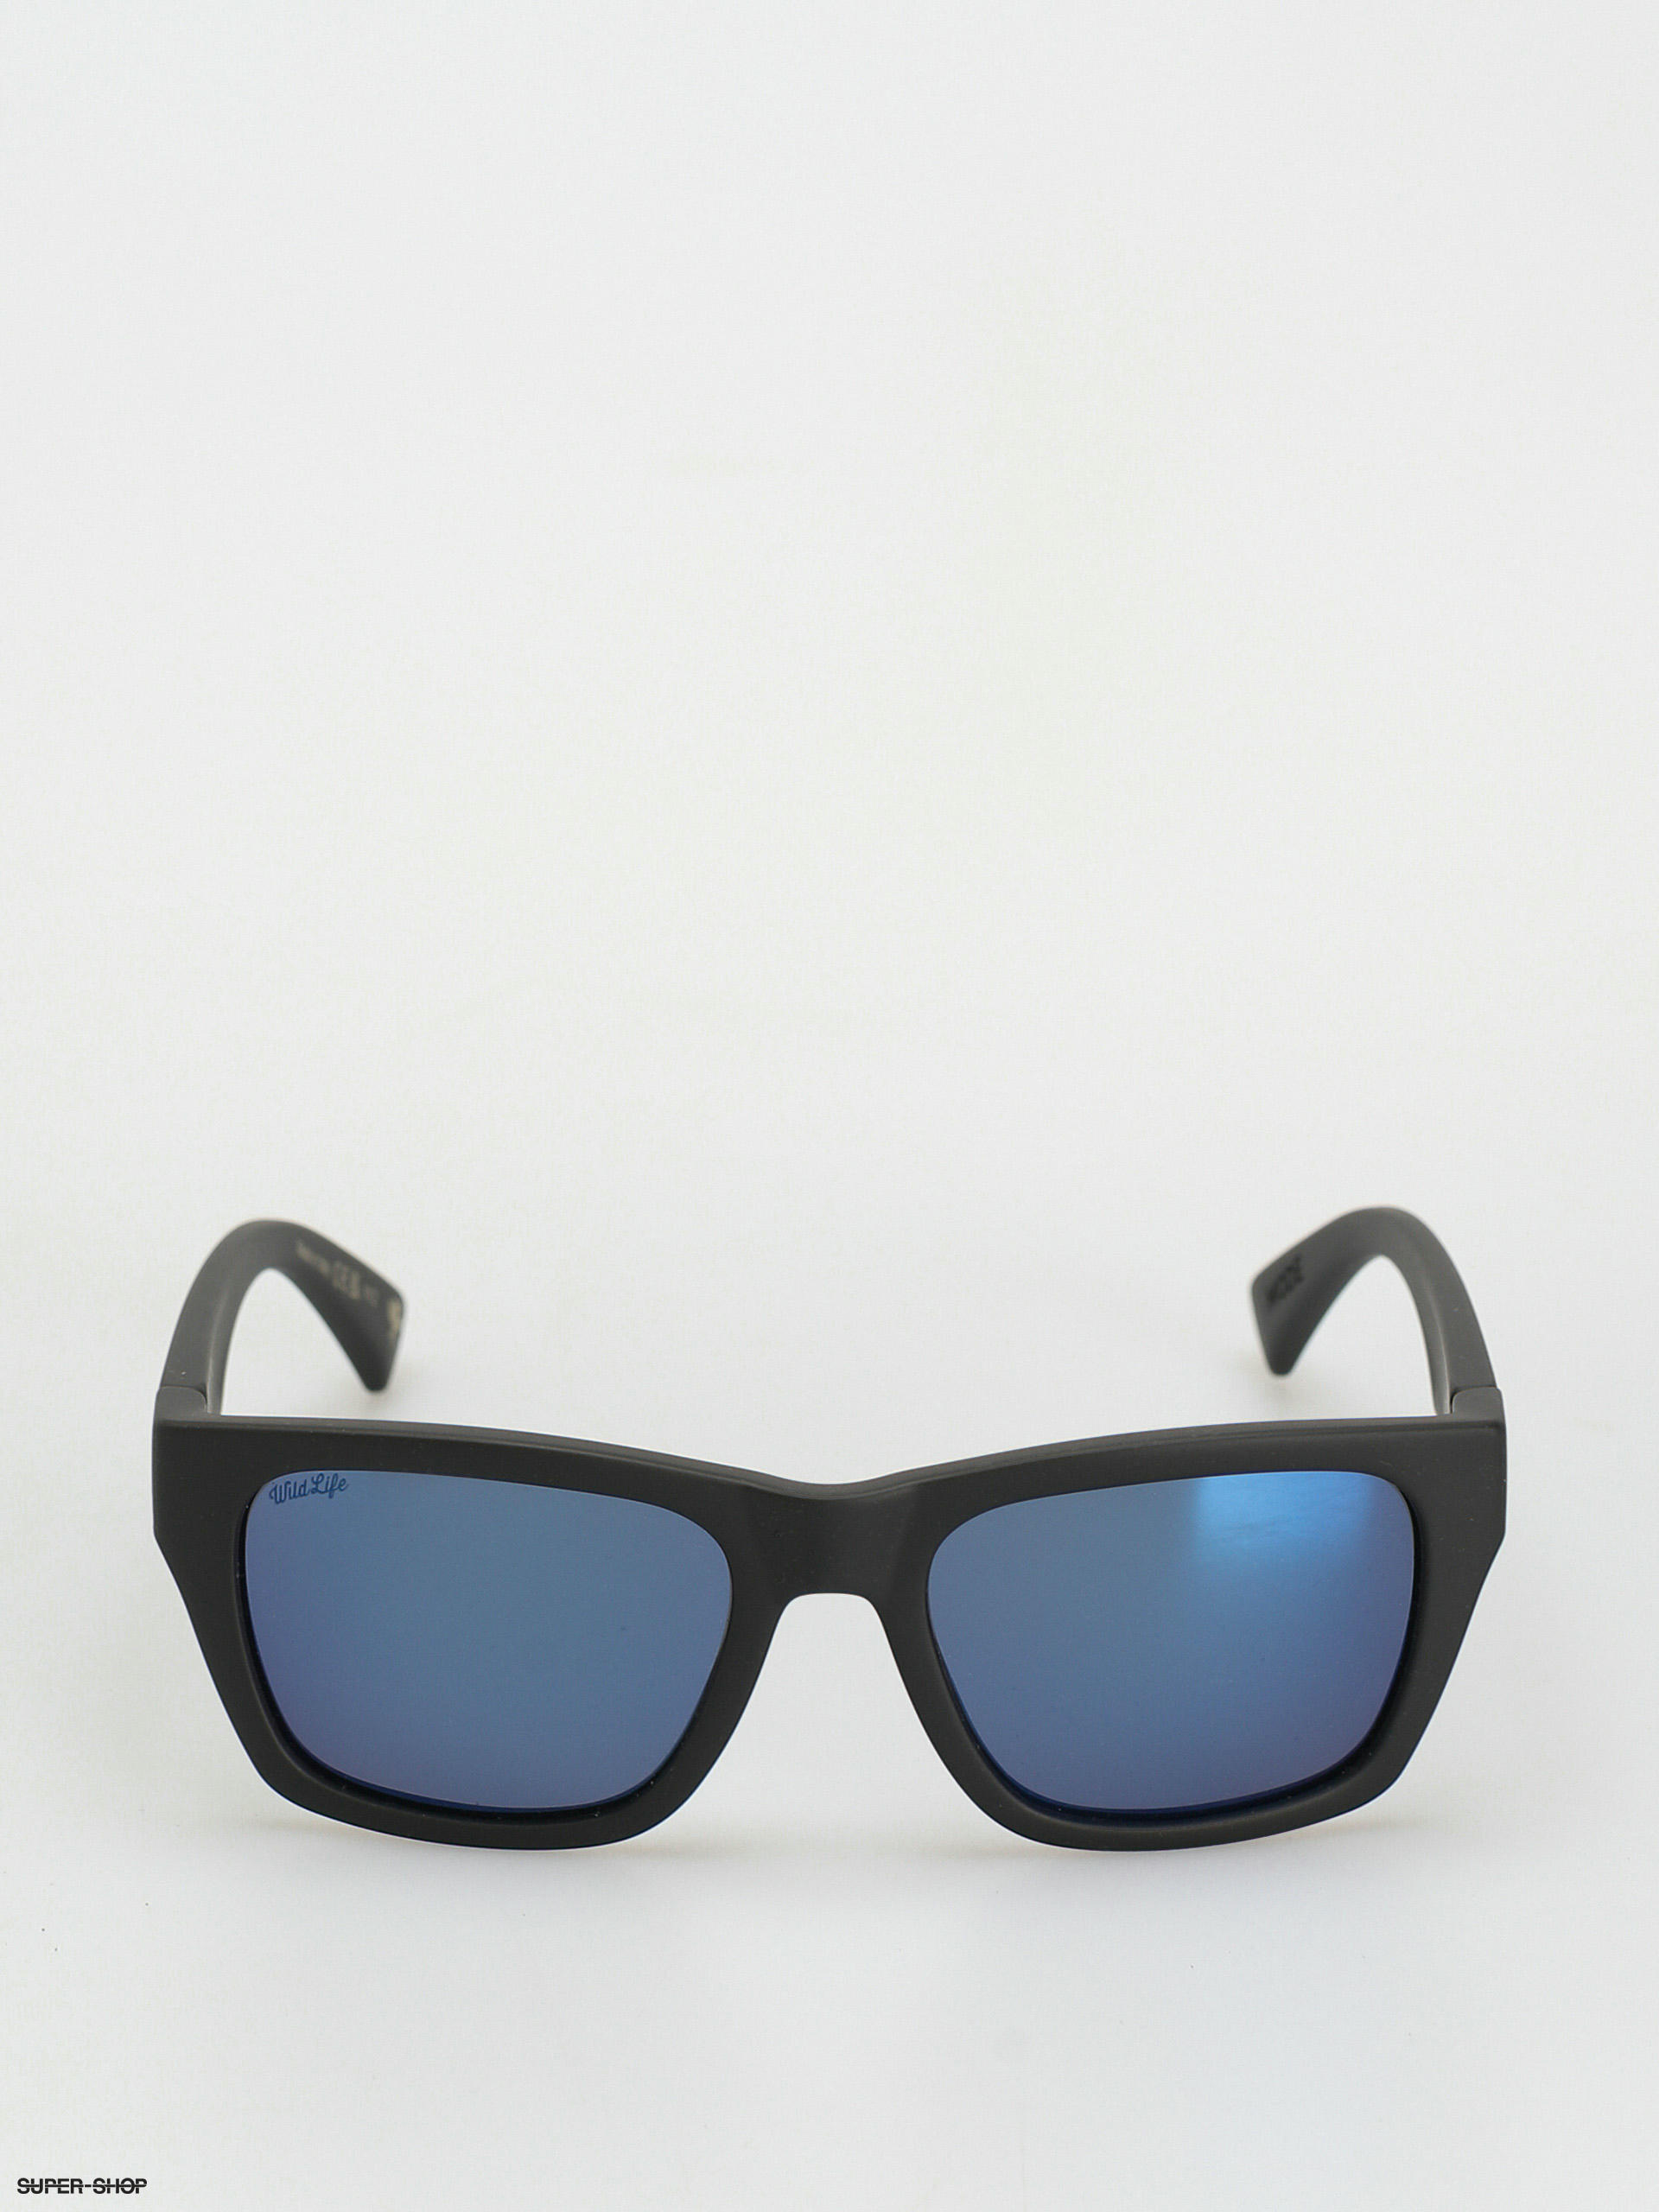 plr) flsh Polar Von Sunglasses Zipper sat/blu (blk Mode